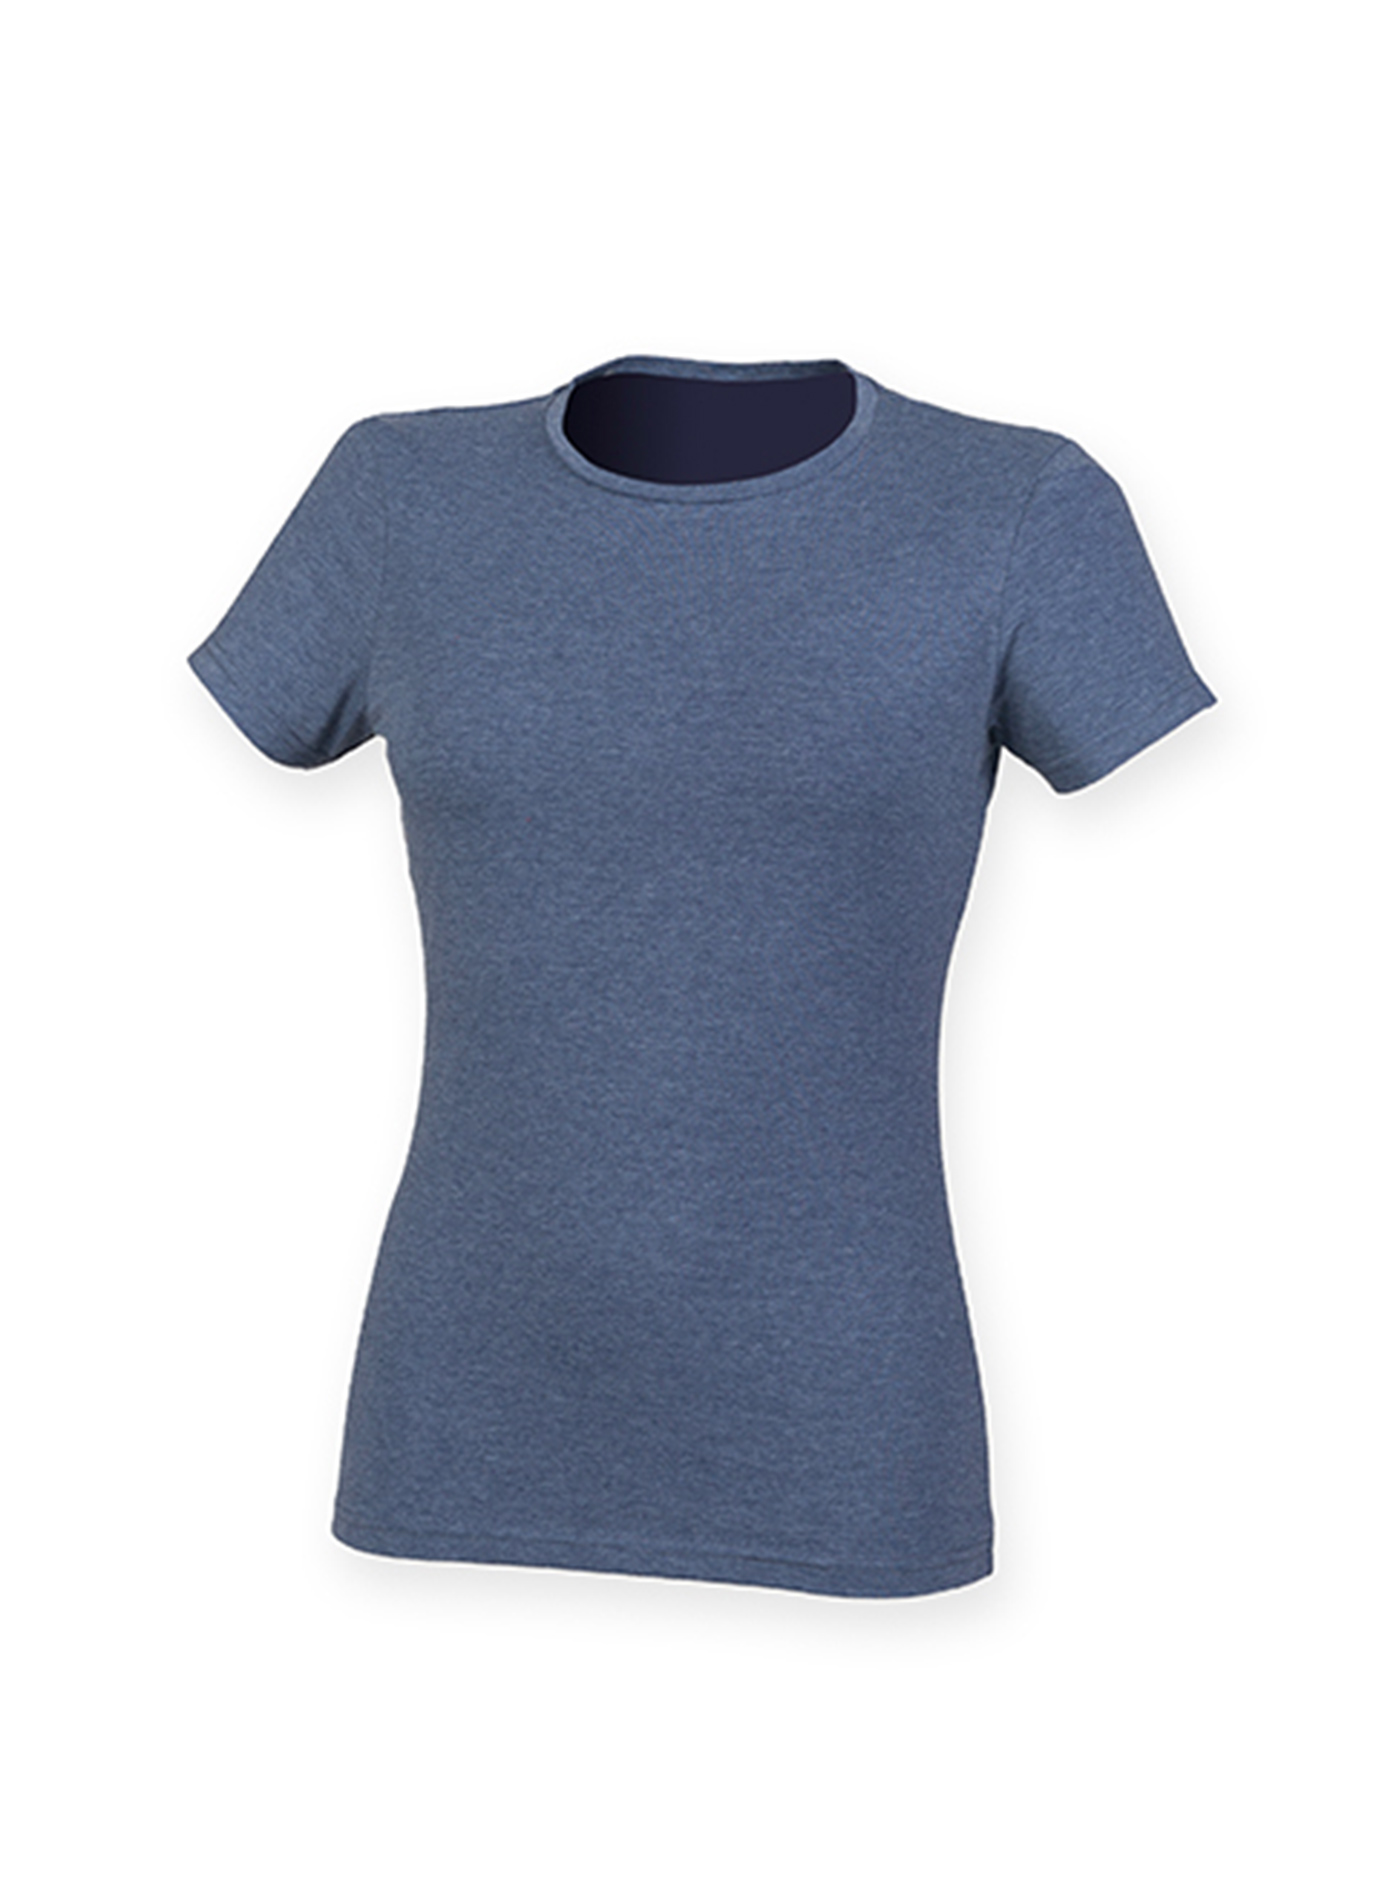 Dámské strečové tričko Skinnifit Feels Good - Tmavě modrá XS